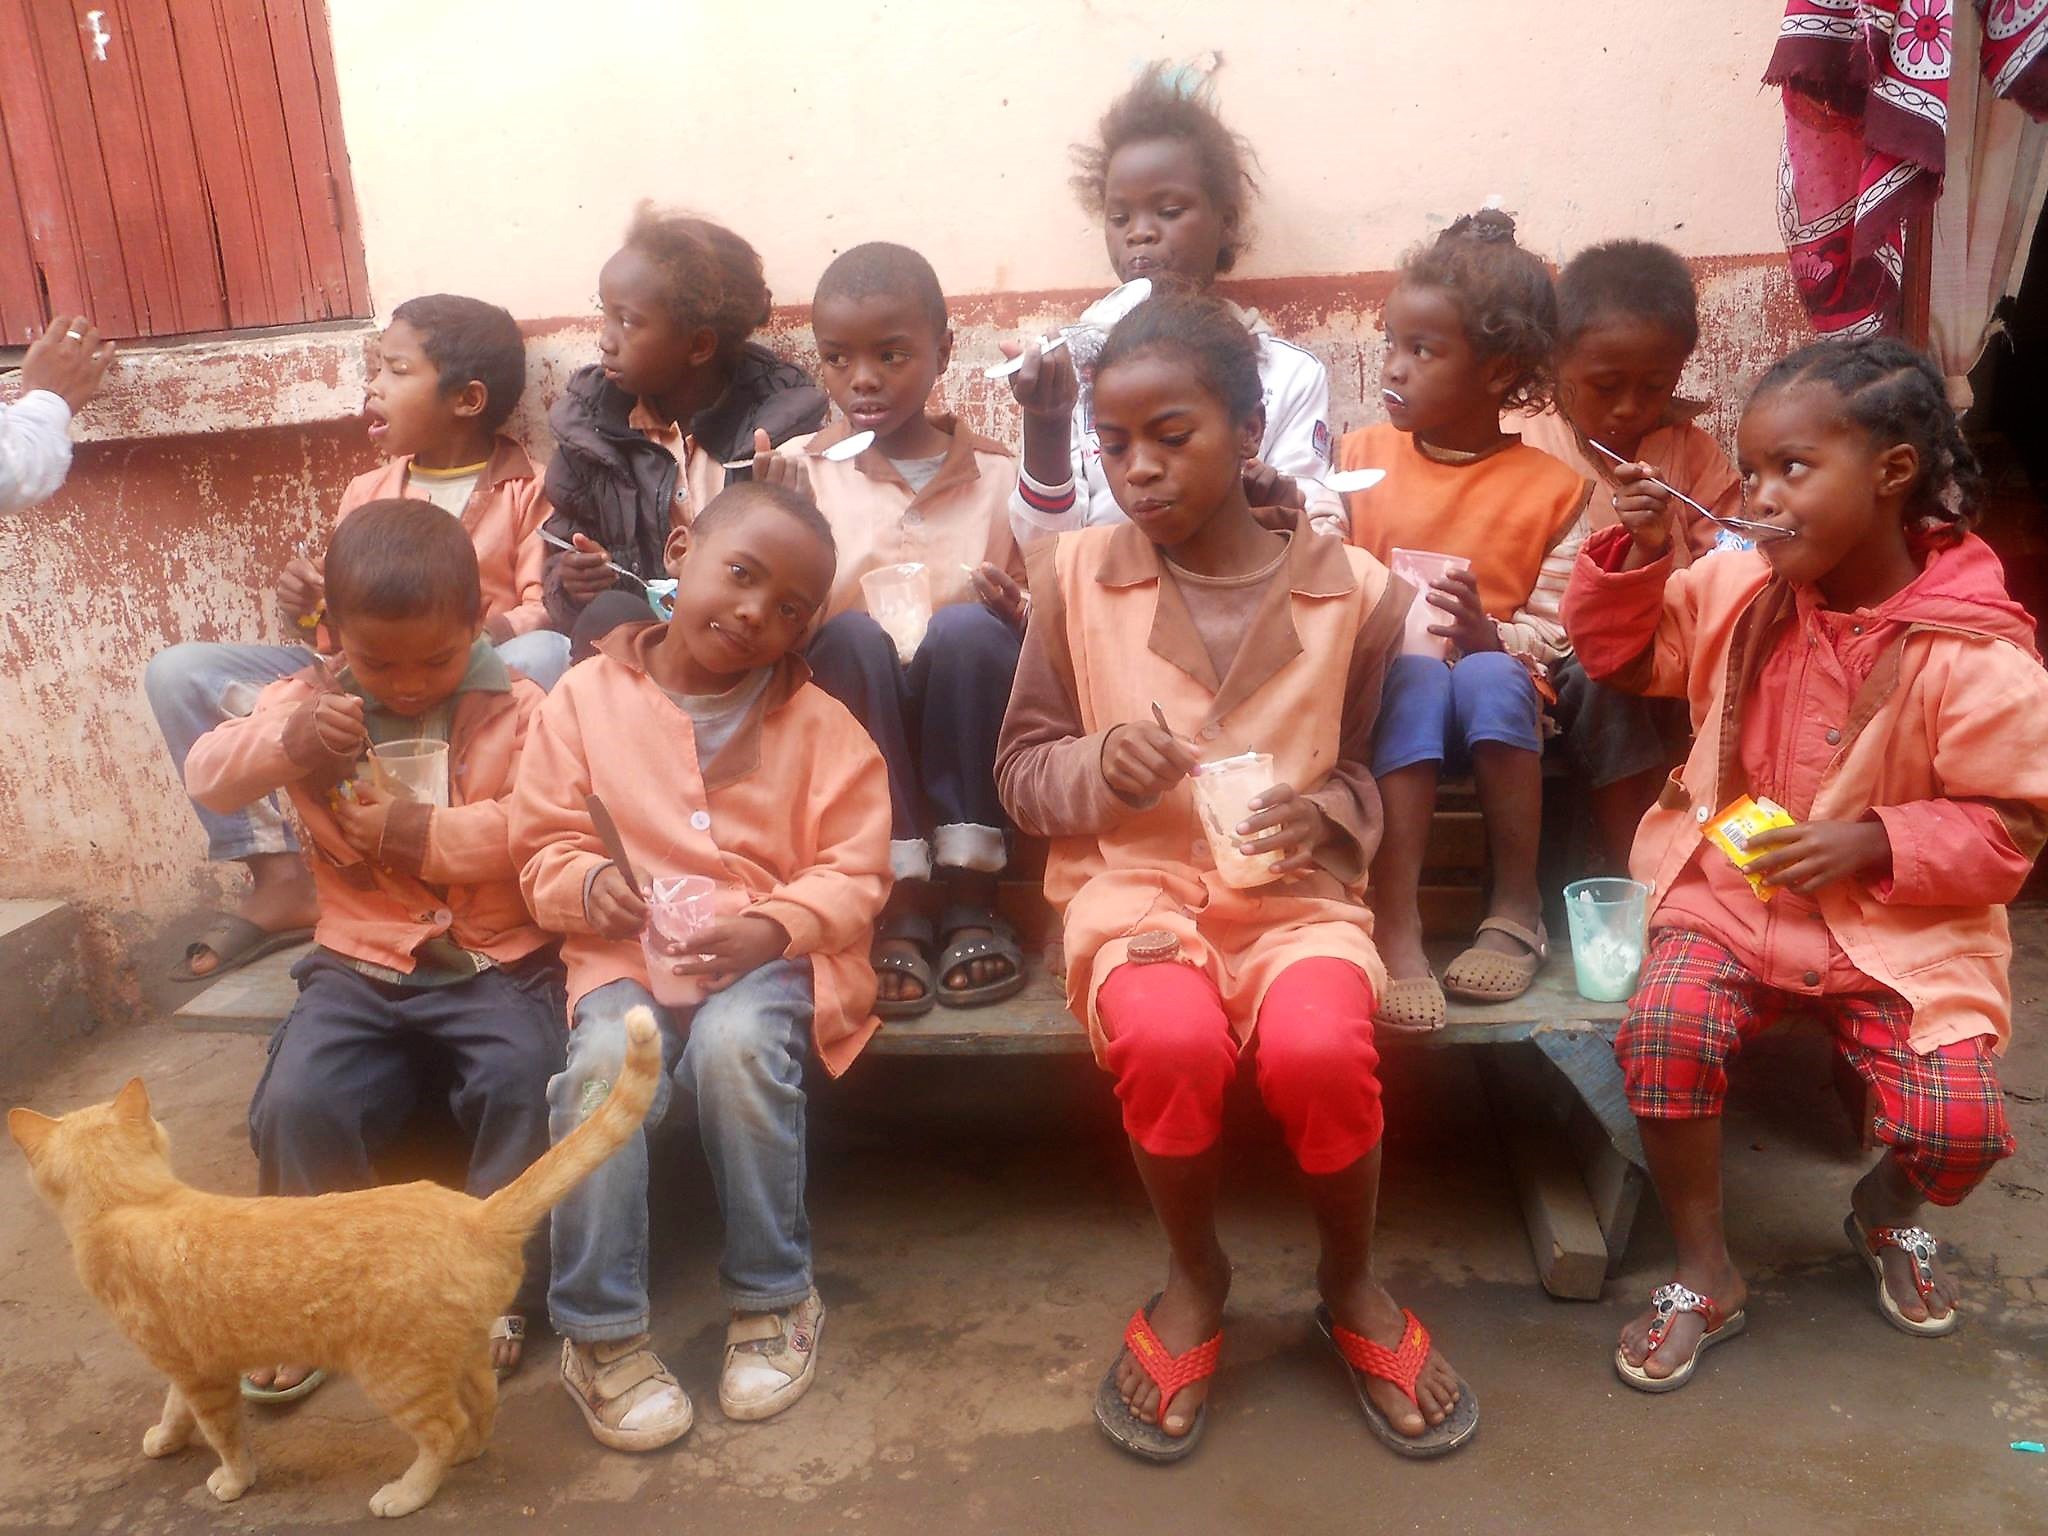 Hungry Madagascar children appreciate Bible Club Snack Time